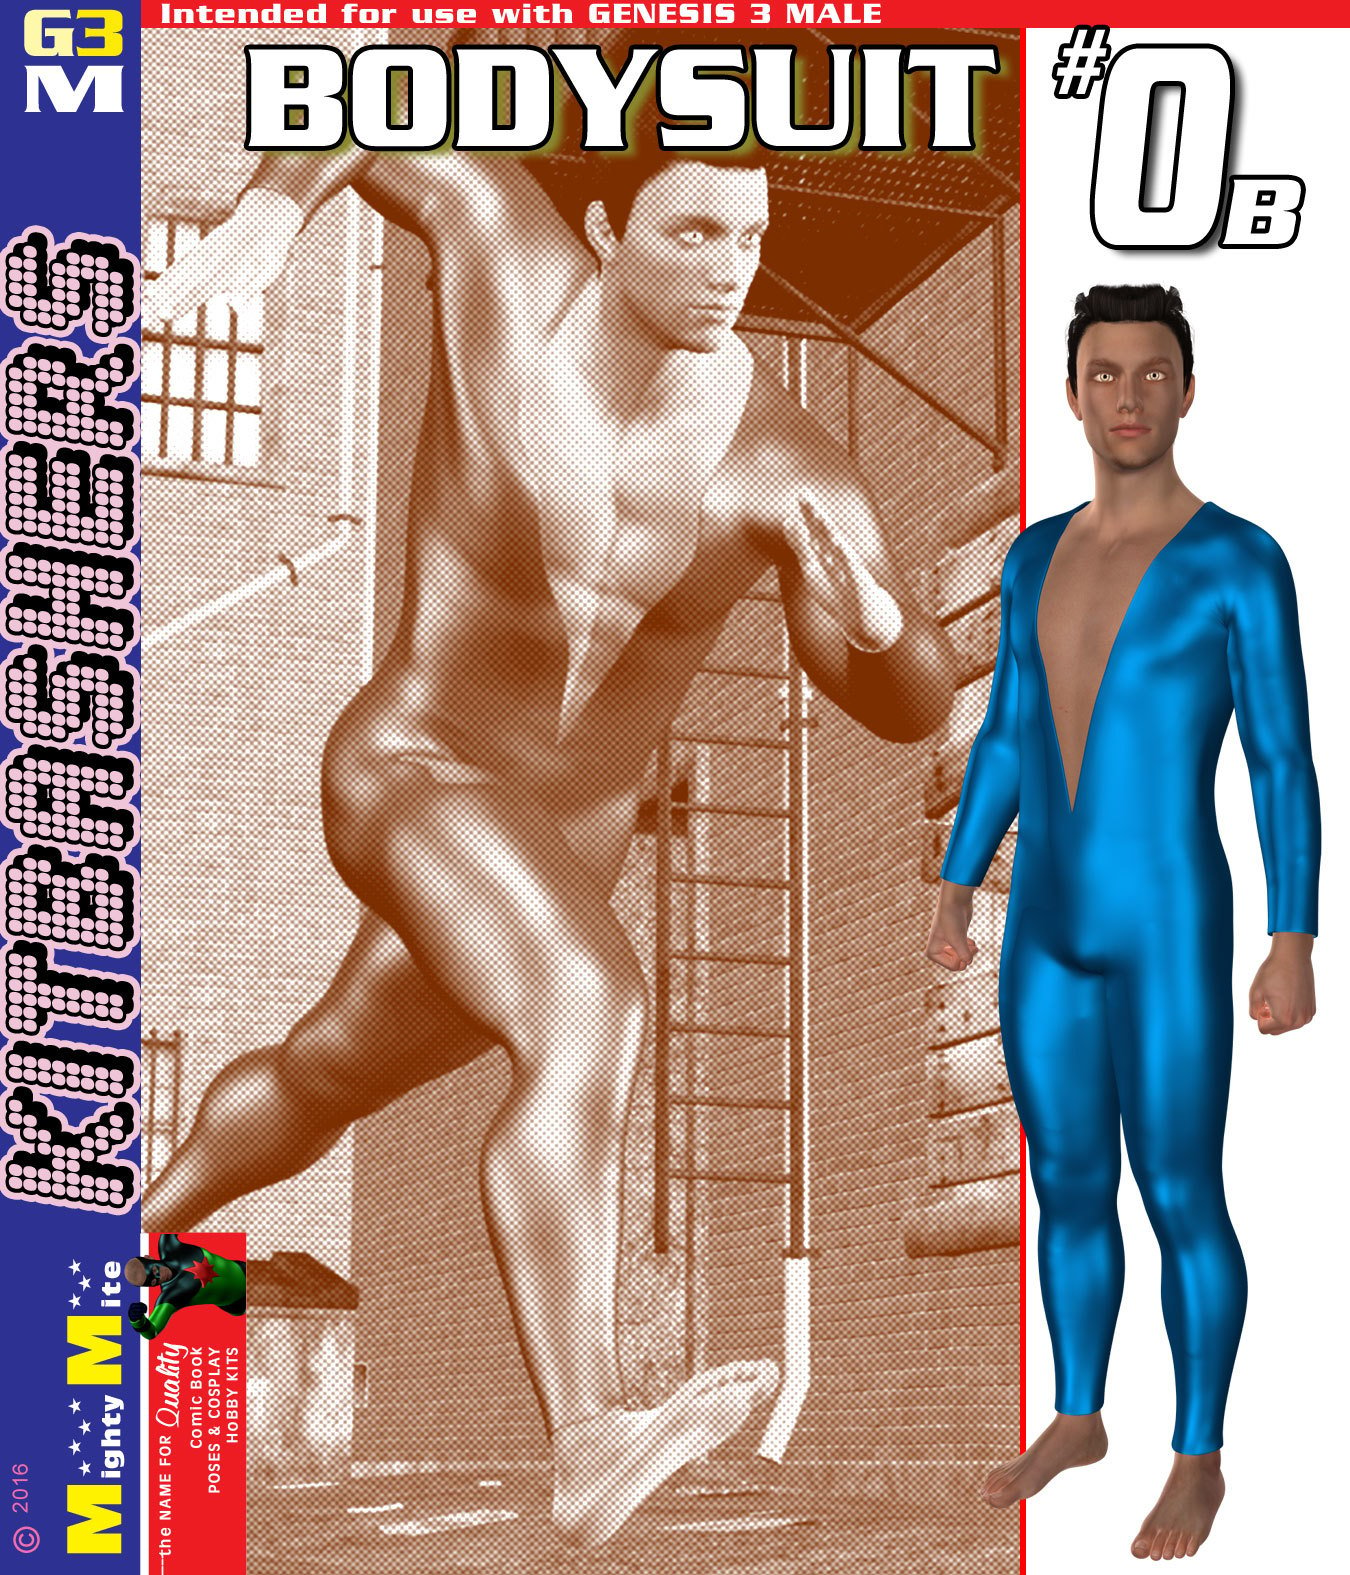 Bodysuit 000B MMKBG3M by: MightyMite, 3D Models by Daz 3D